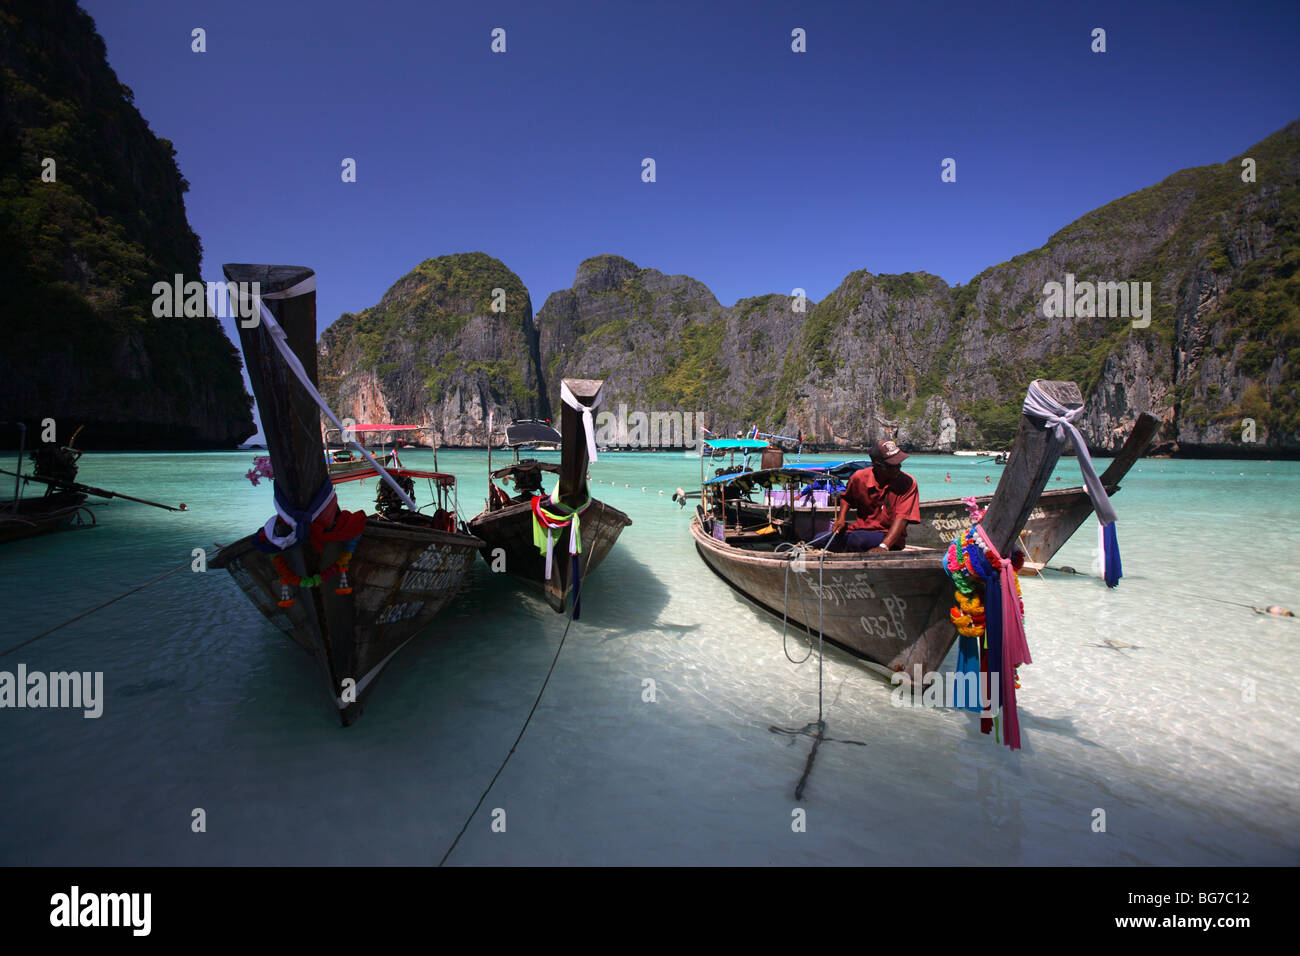 Long-tail boats in Maya Bay, Phi Phi Leh Island, Thailand Stock Photo